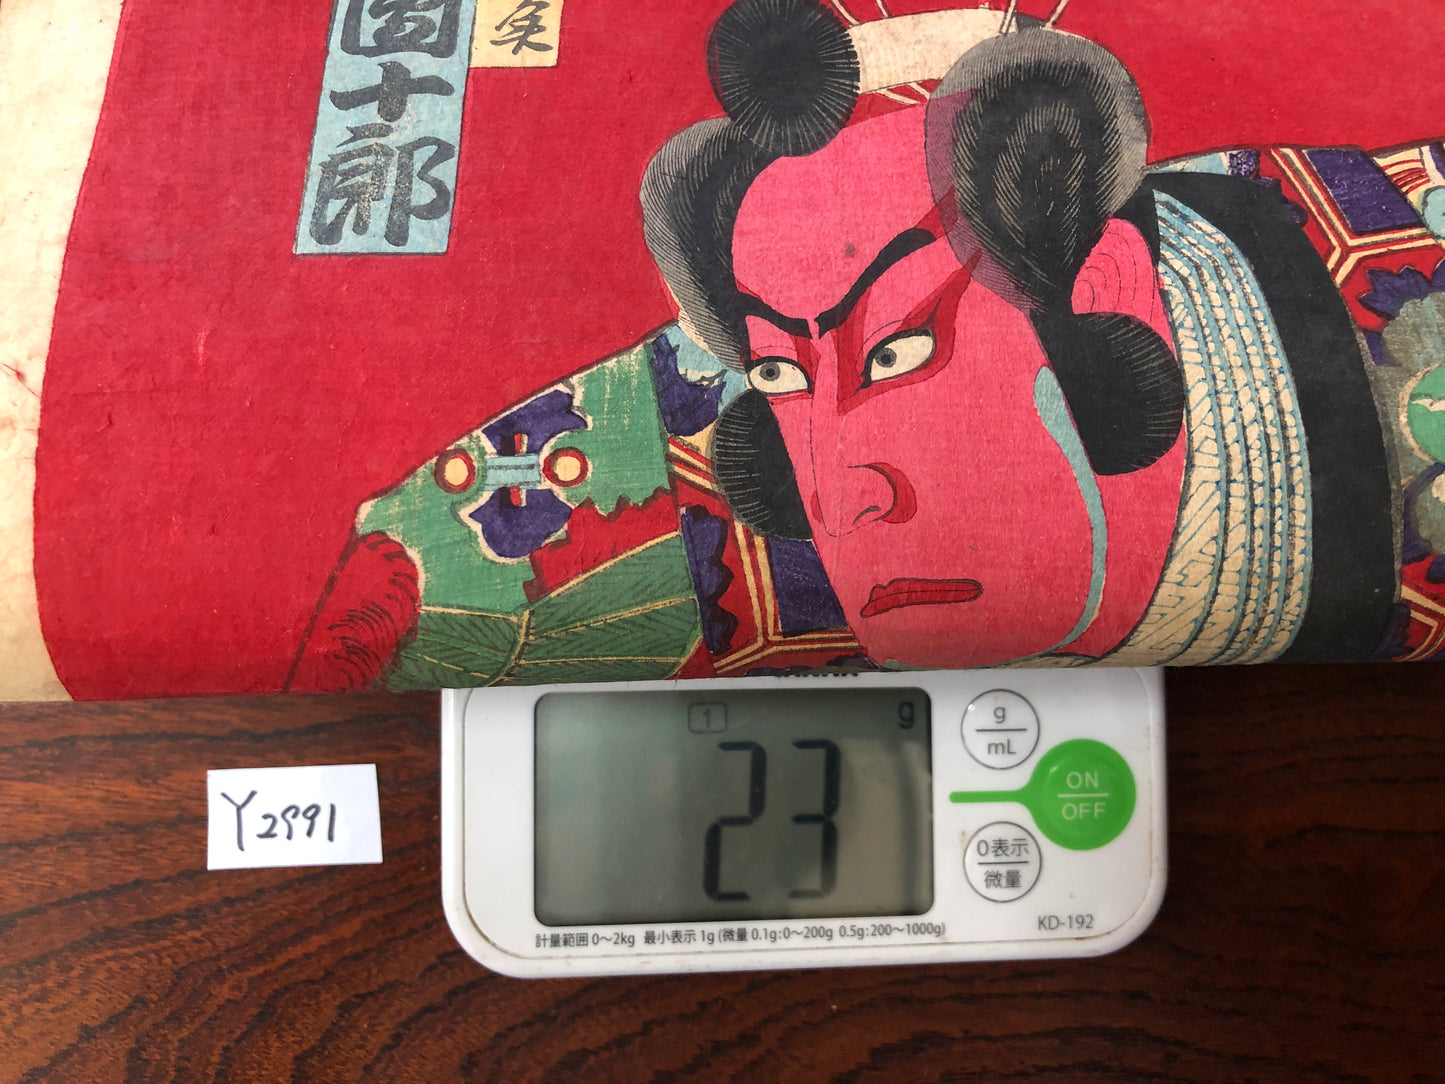 Y2991 WOODBLOCK PRINT Kunichika Kabuki actor triptych Japan Ukiyoe vintage art